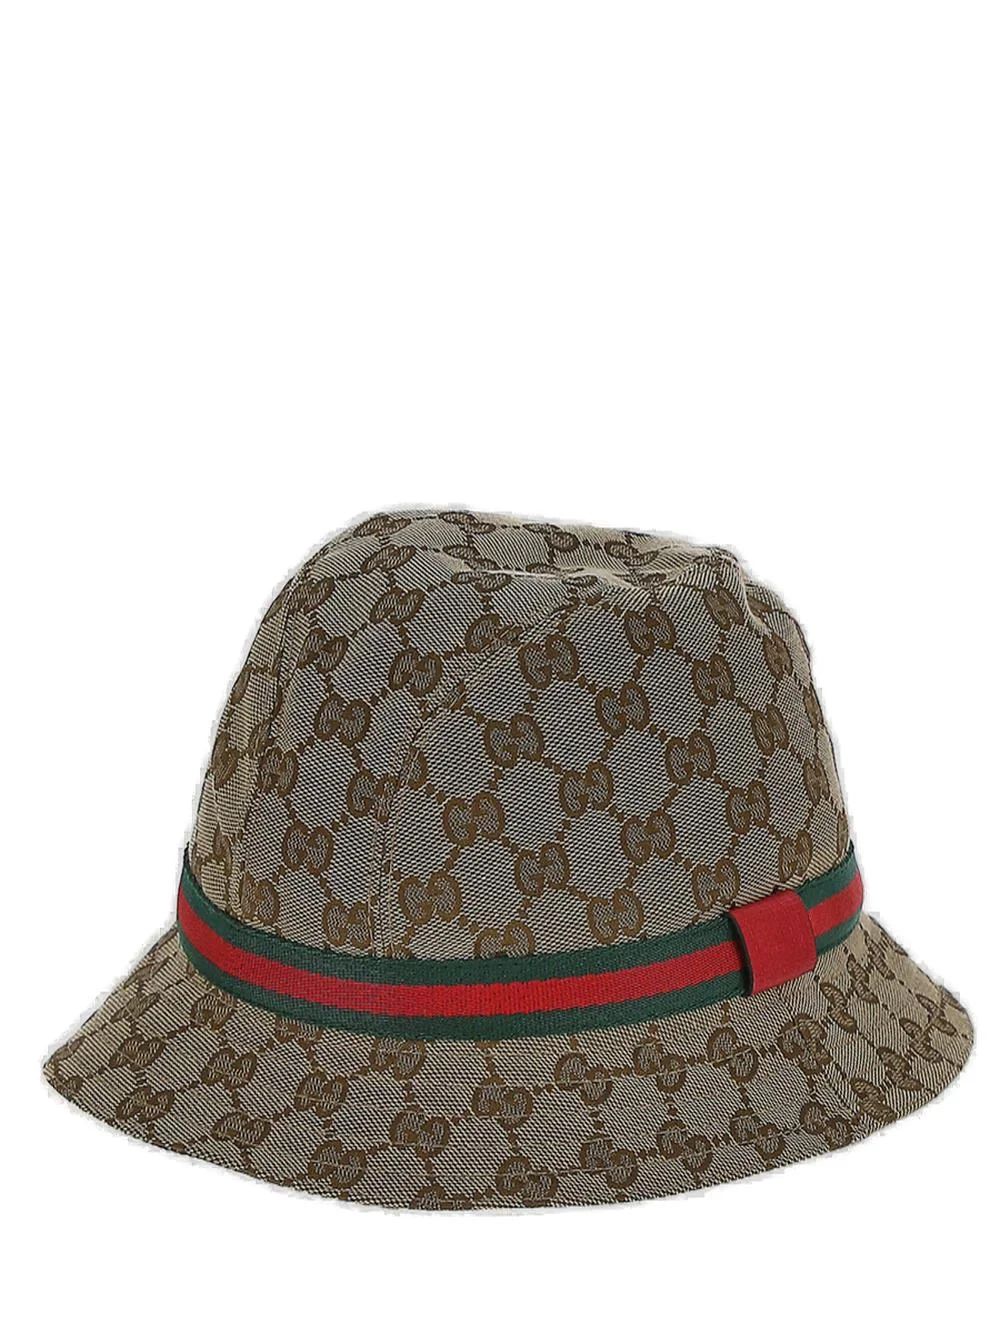 Gucci Kids GG Motif Fedora Hat | Cettire Global